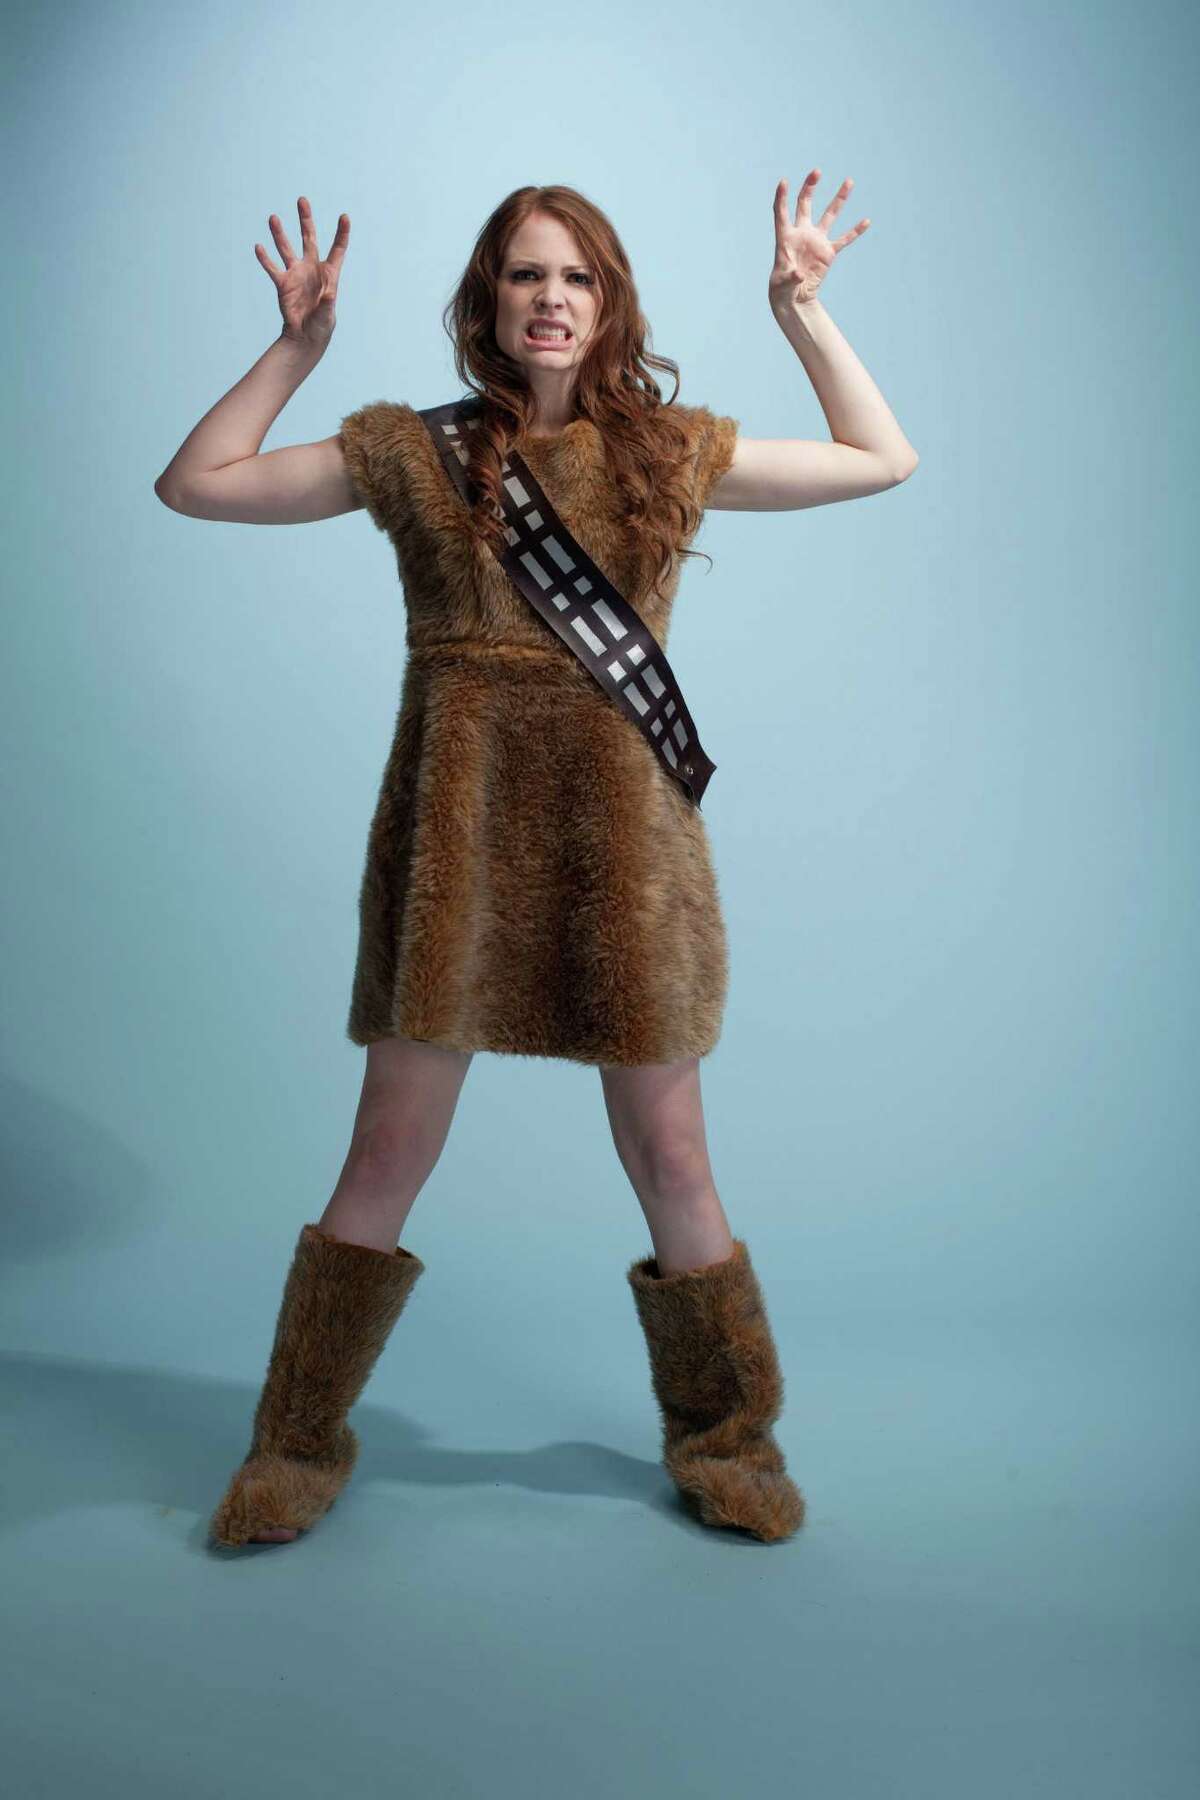 Sofi Leggett models a combination Wookiee/Ewok dress designed by Crissy Baker for Nerd Alert Designs, which is based in San Antonio and run by Baker, Leggett, Crissy's sister Kathy Baker and their friend Amanda Guerra-Deibel.